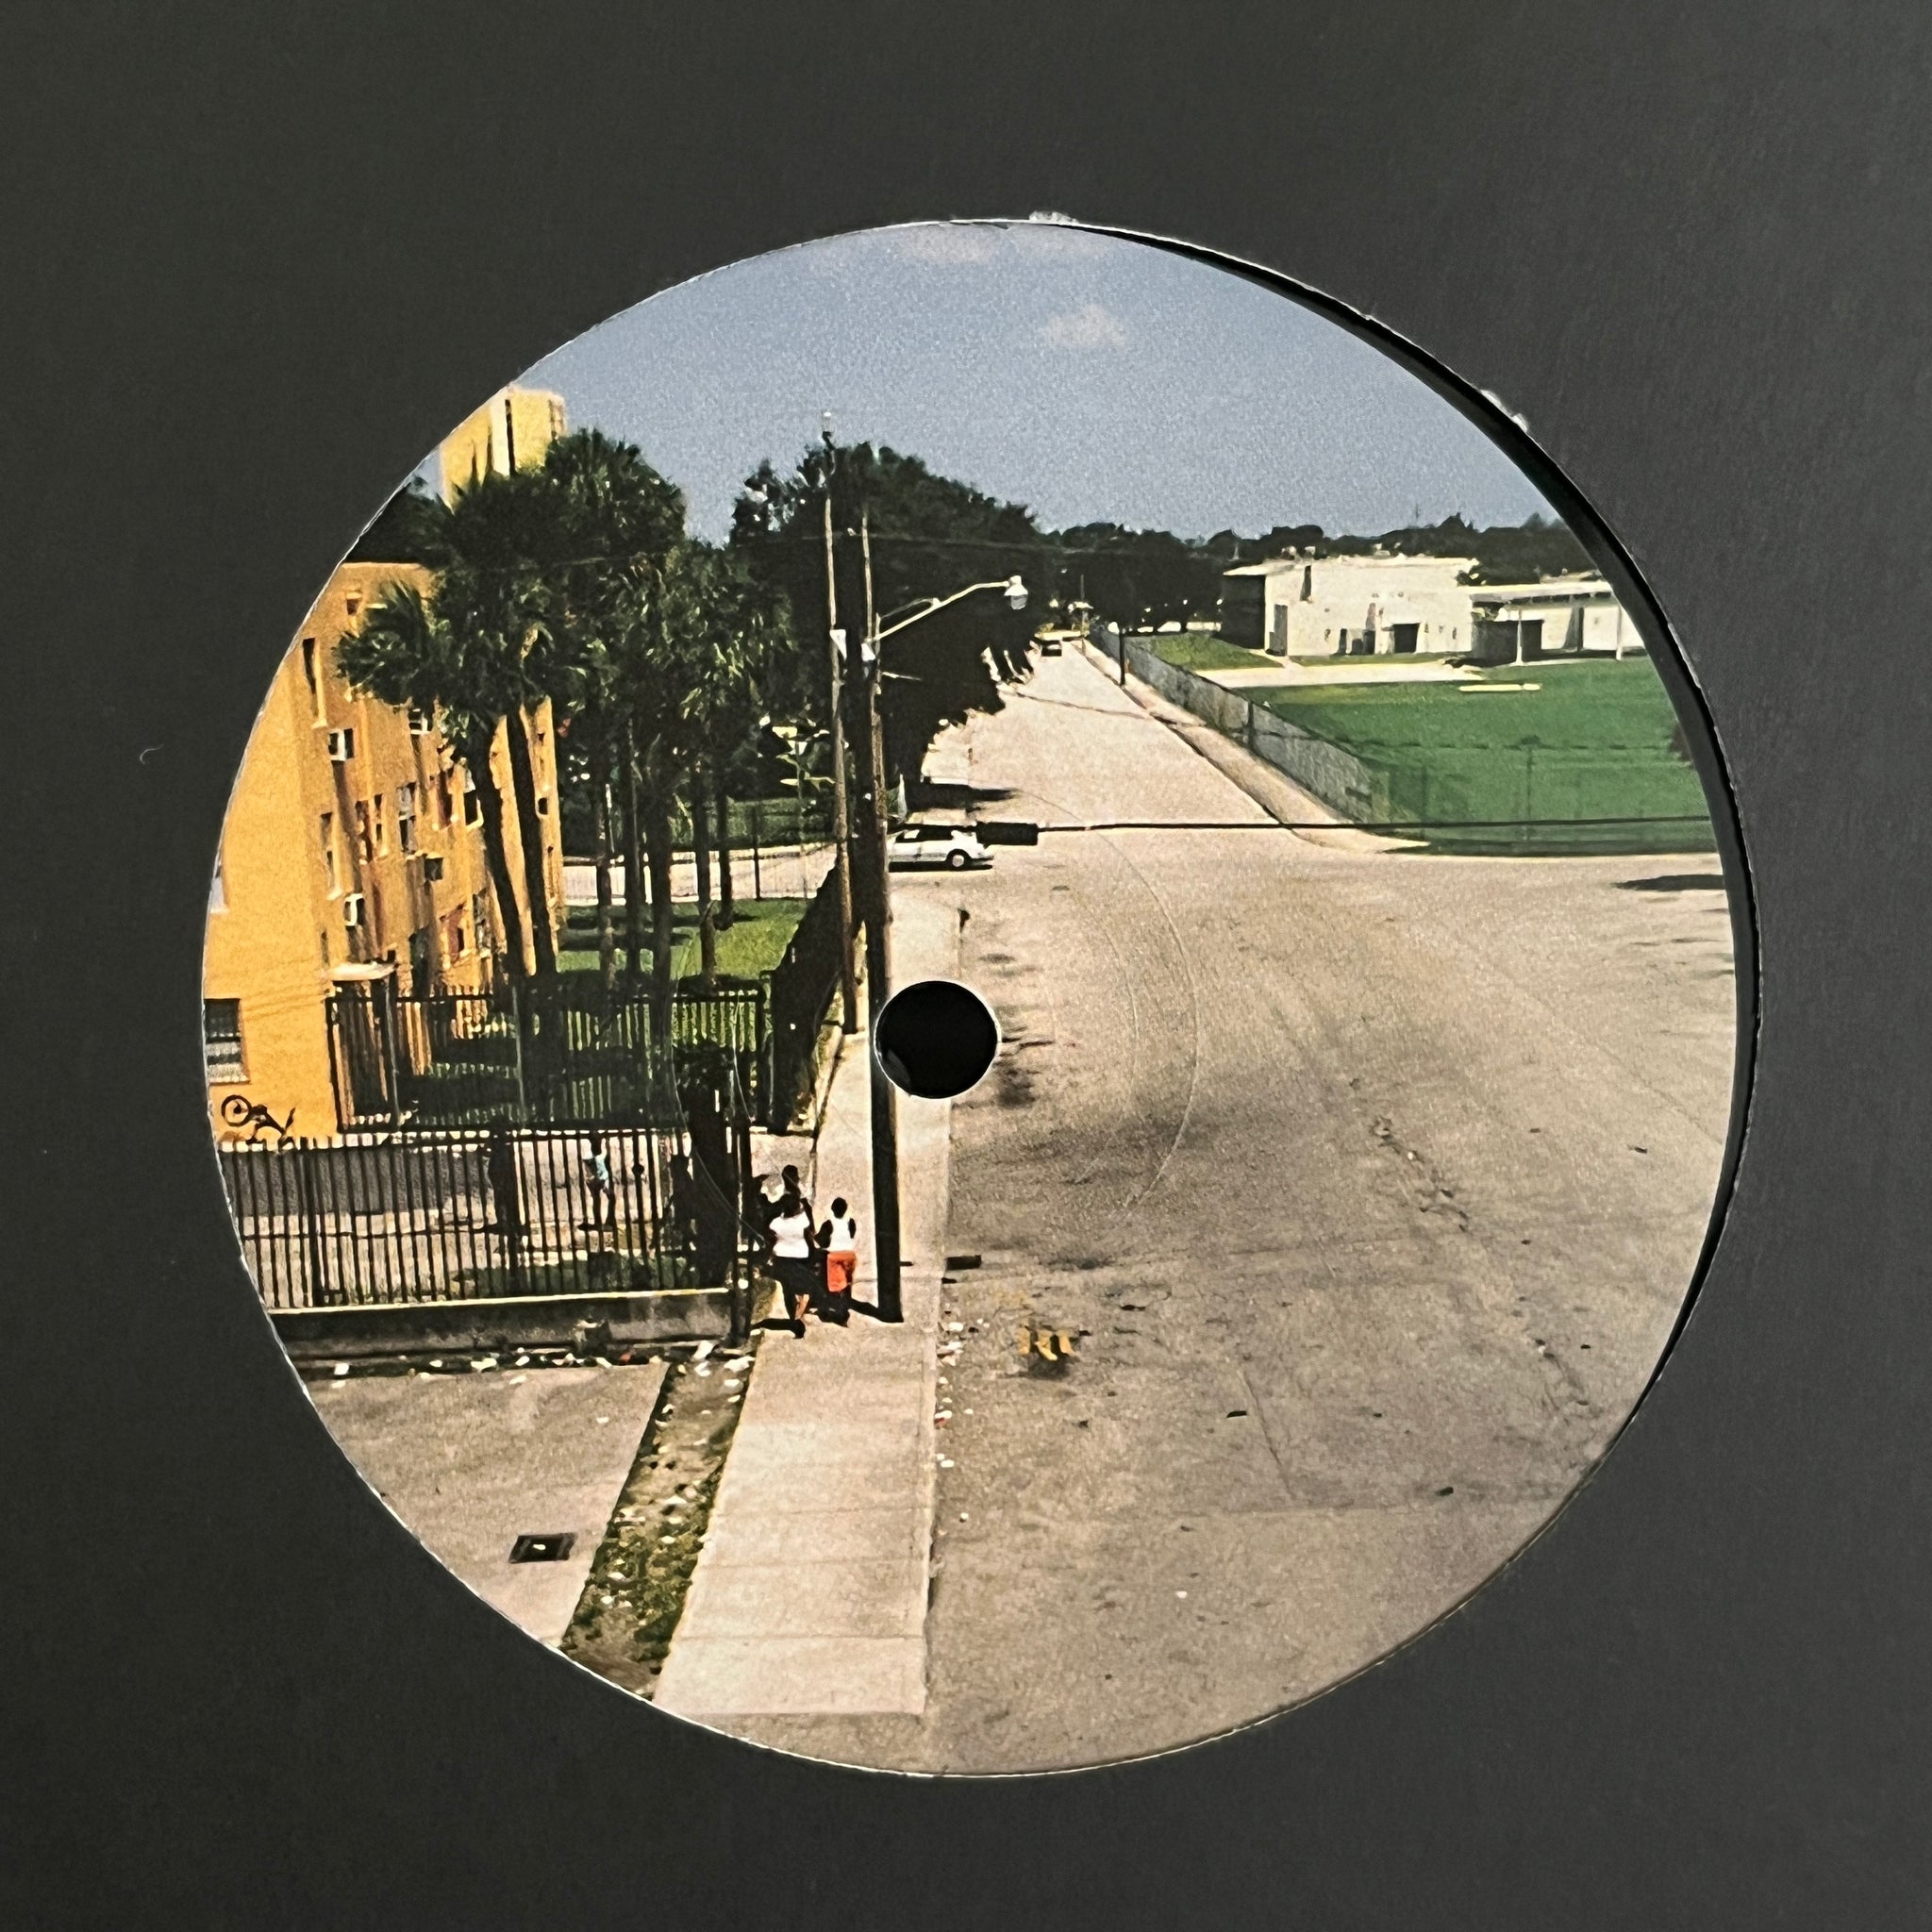 Greg Beato ‎– Apron EP